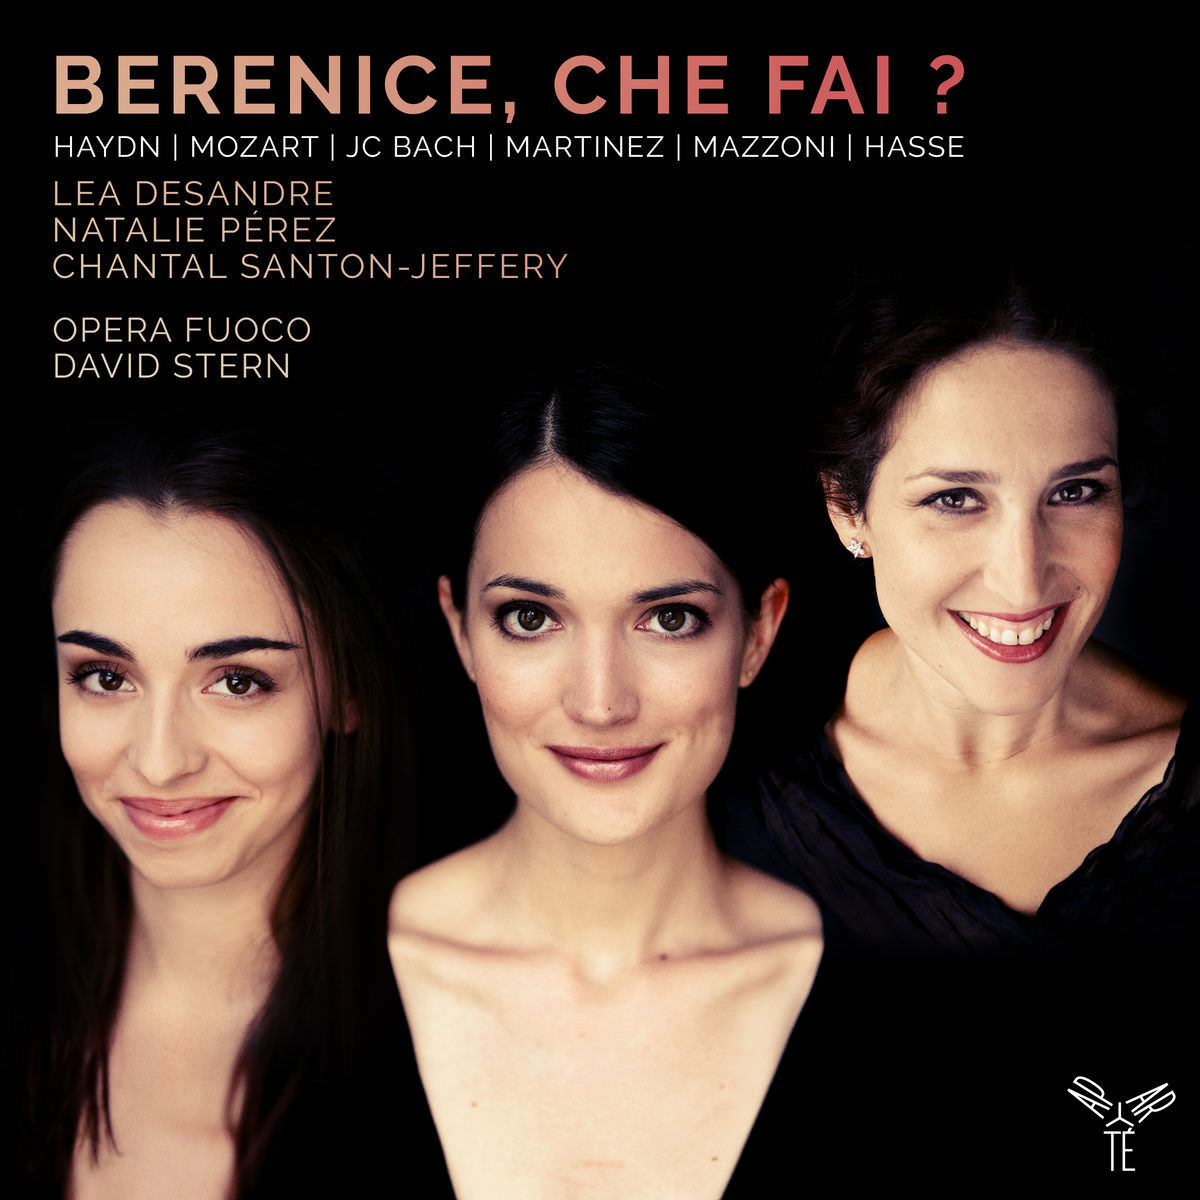 Lea Desandre, Nathalie Perez, Chantal Santon Jeffery, Opera Fuoco and David Stern - Berenice, che fai ? (2017) [Qobuz FLAC 24bit/96kHz]